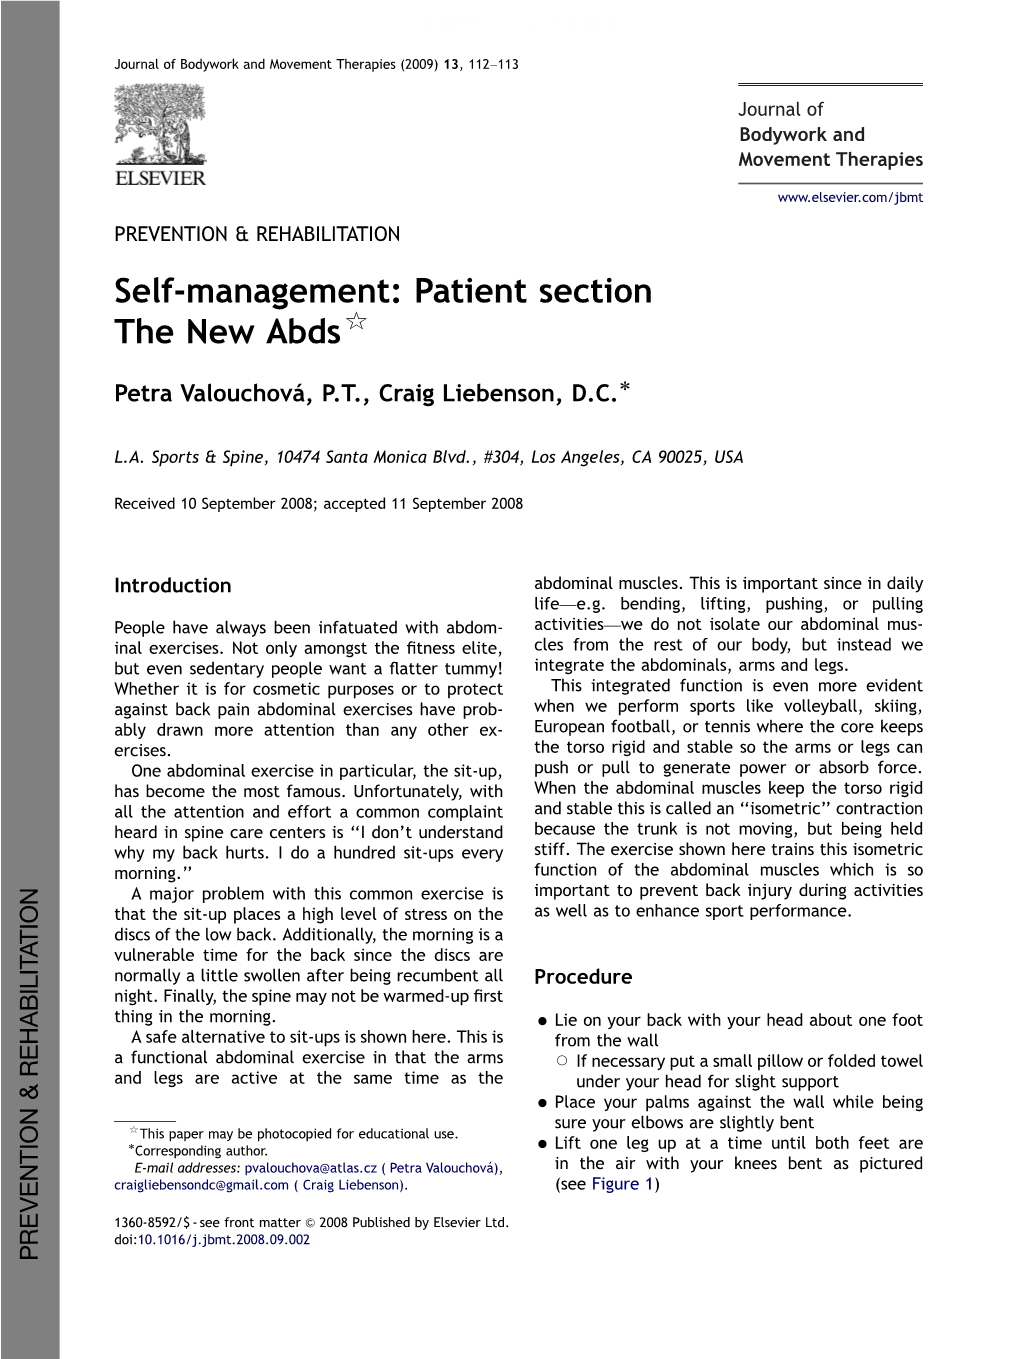 Self-Management: Patient Section the New Abds$